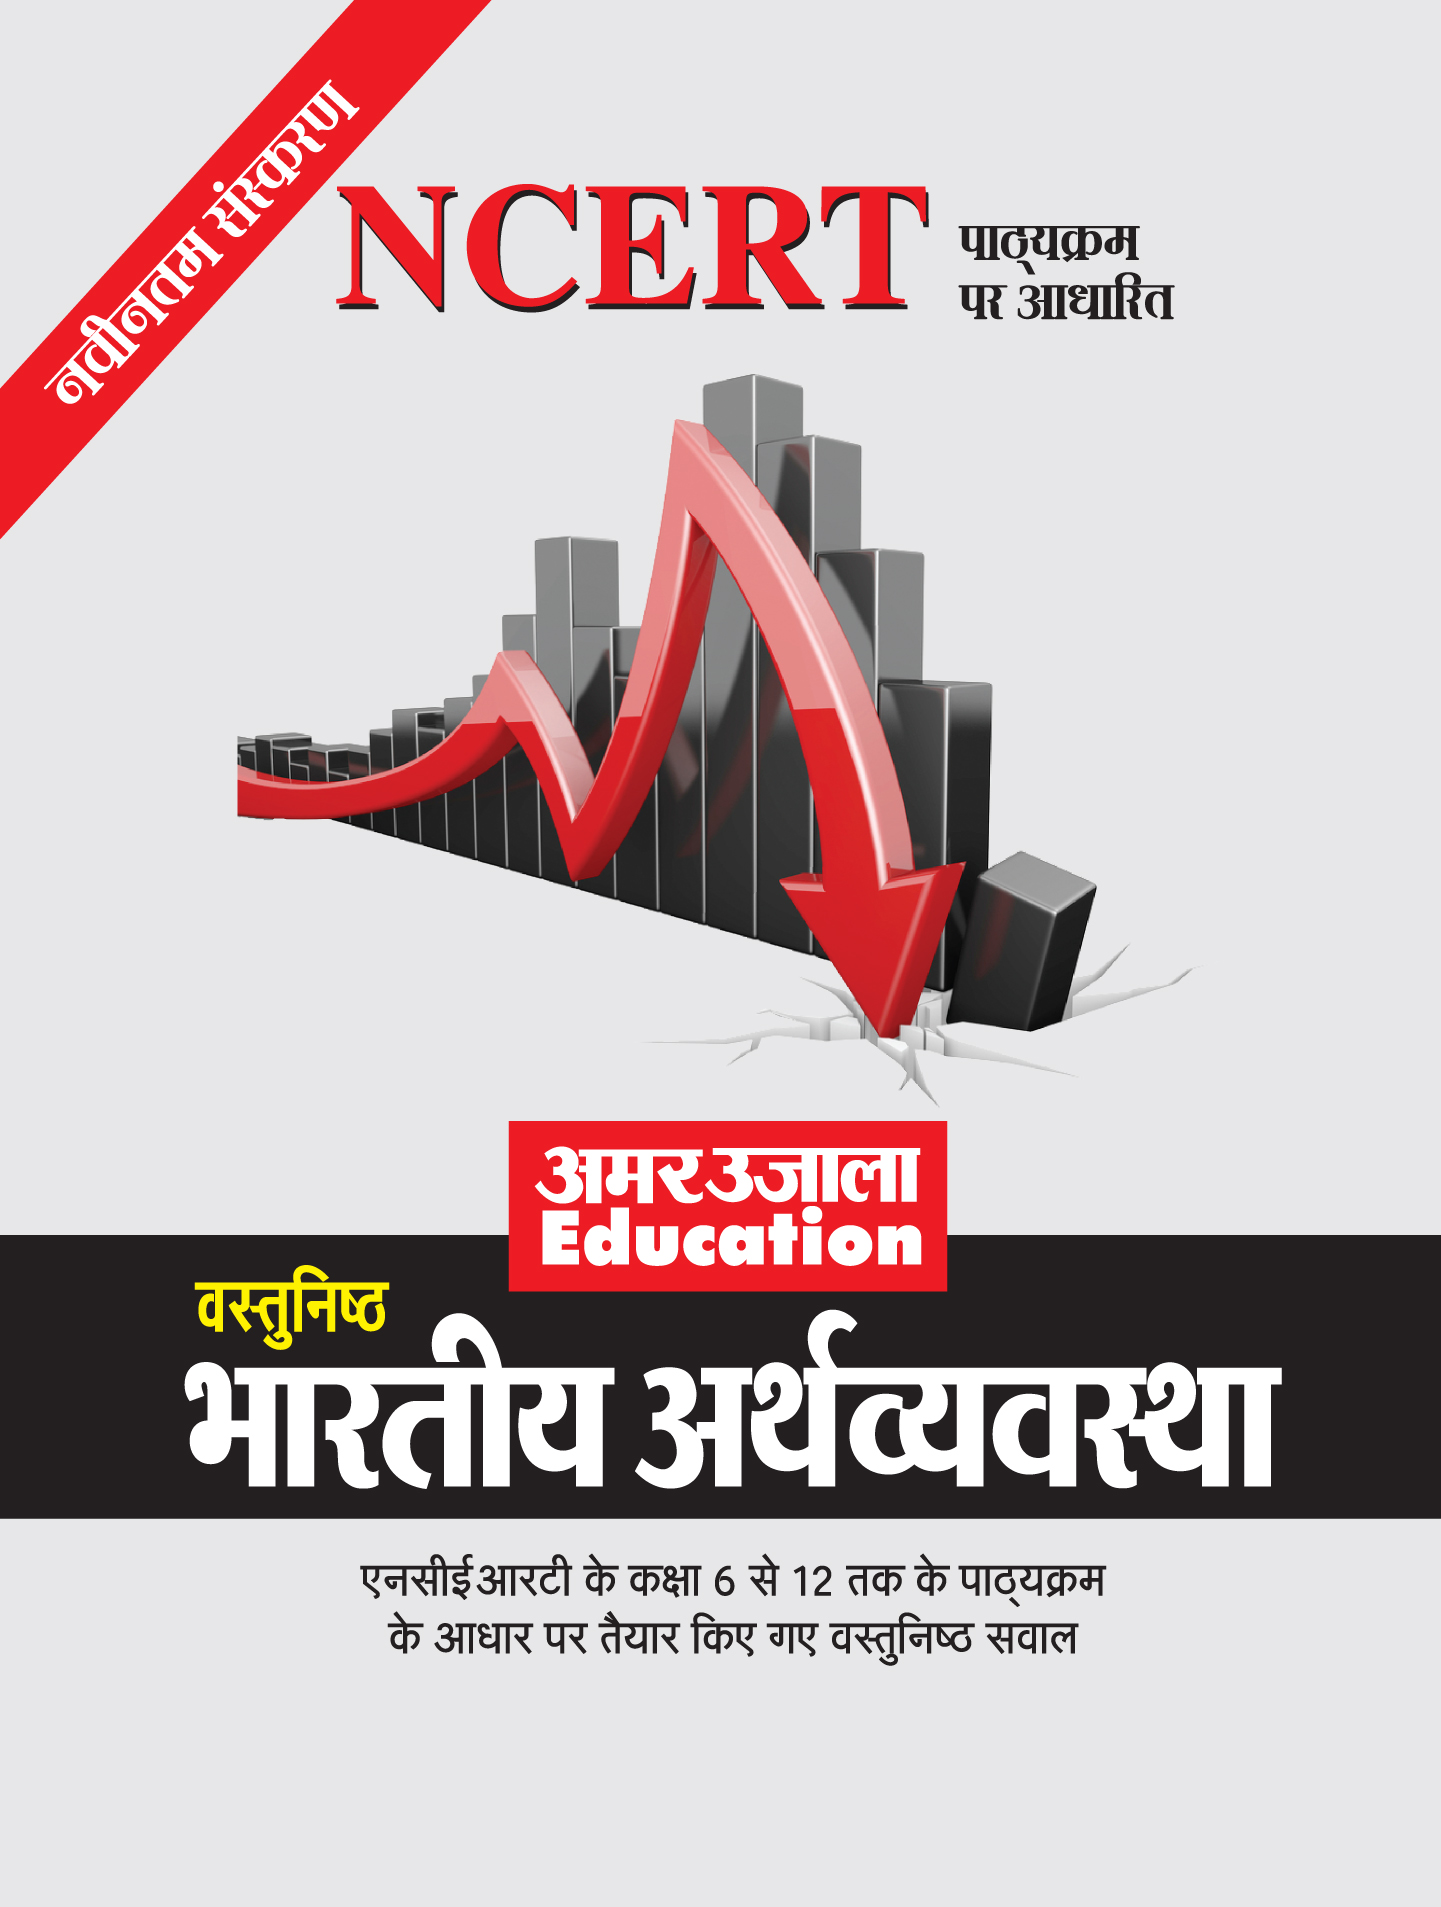 NCERT Objective Indian Economy (Hindi)